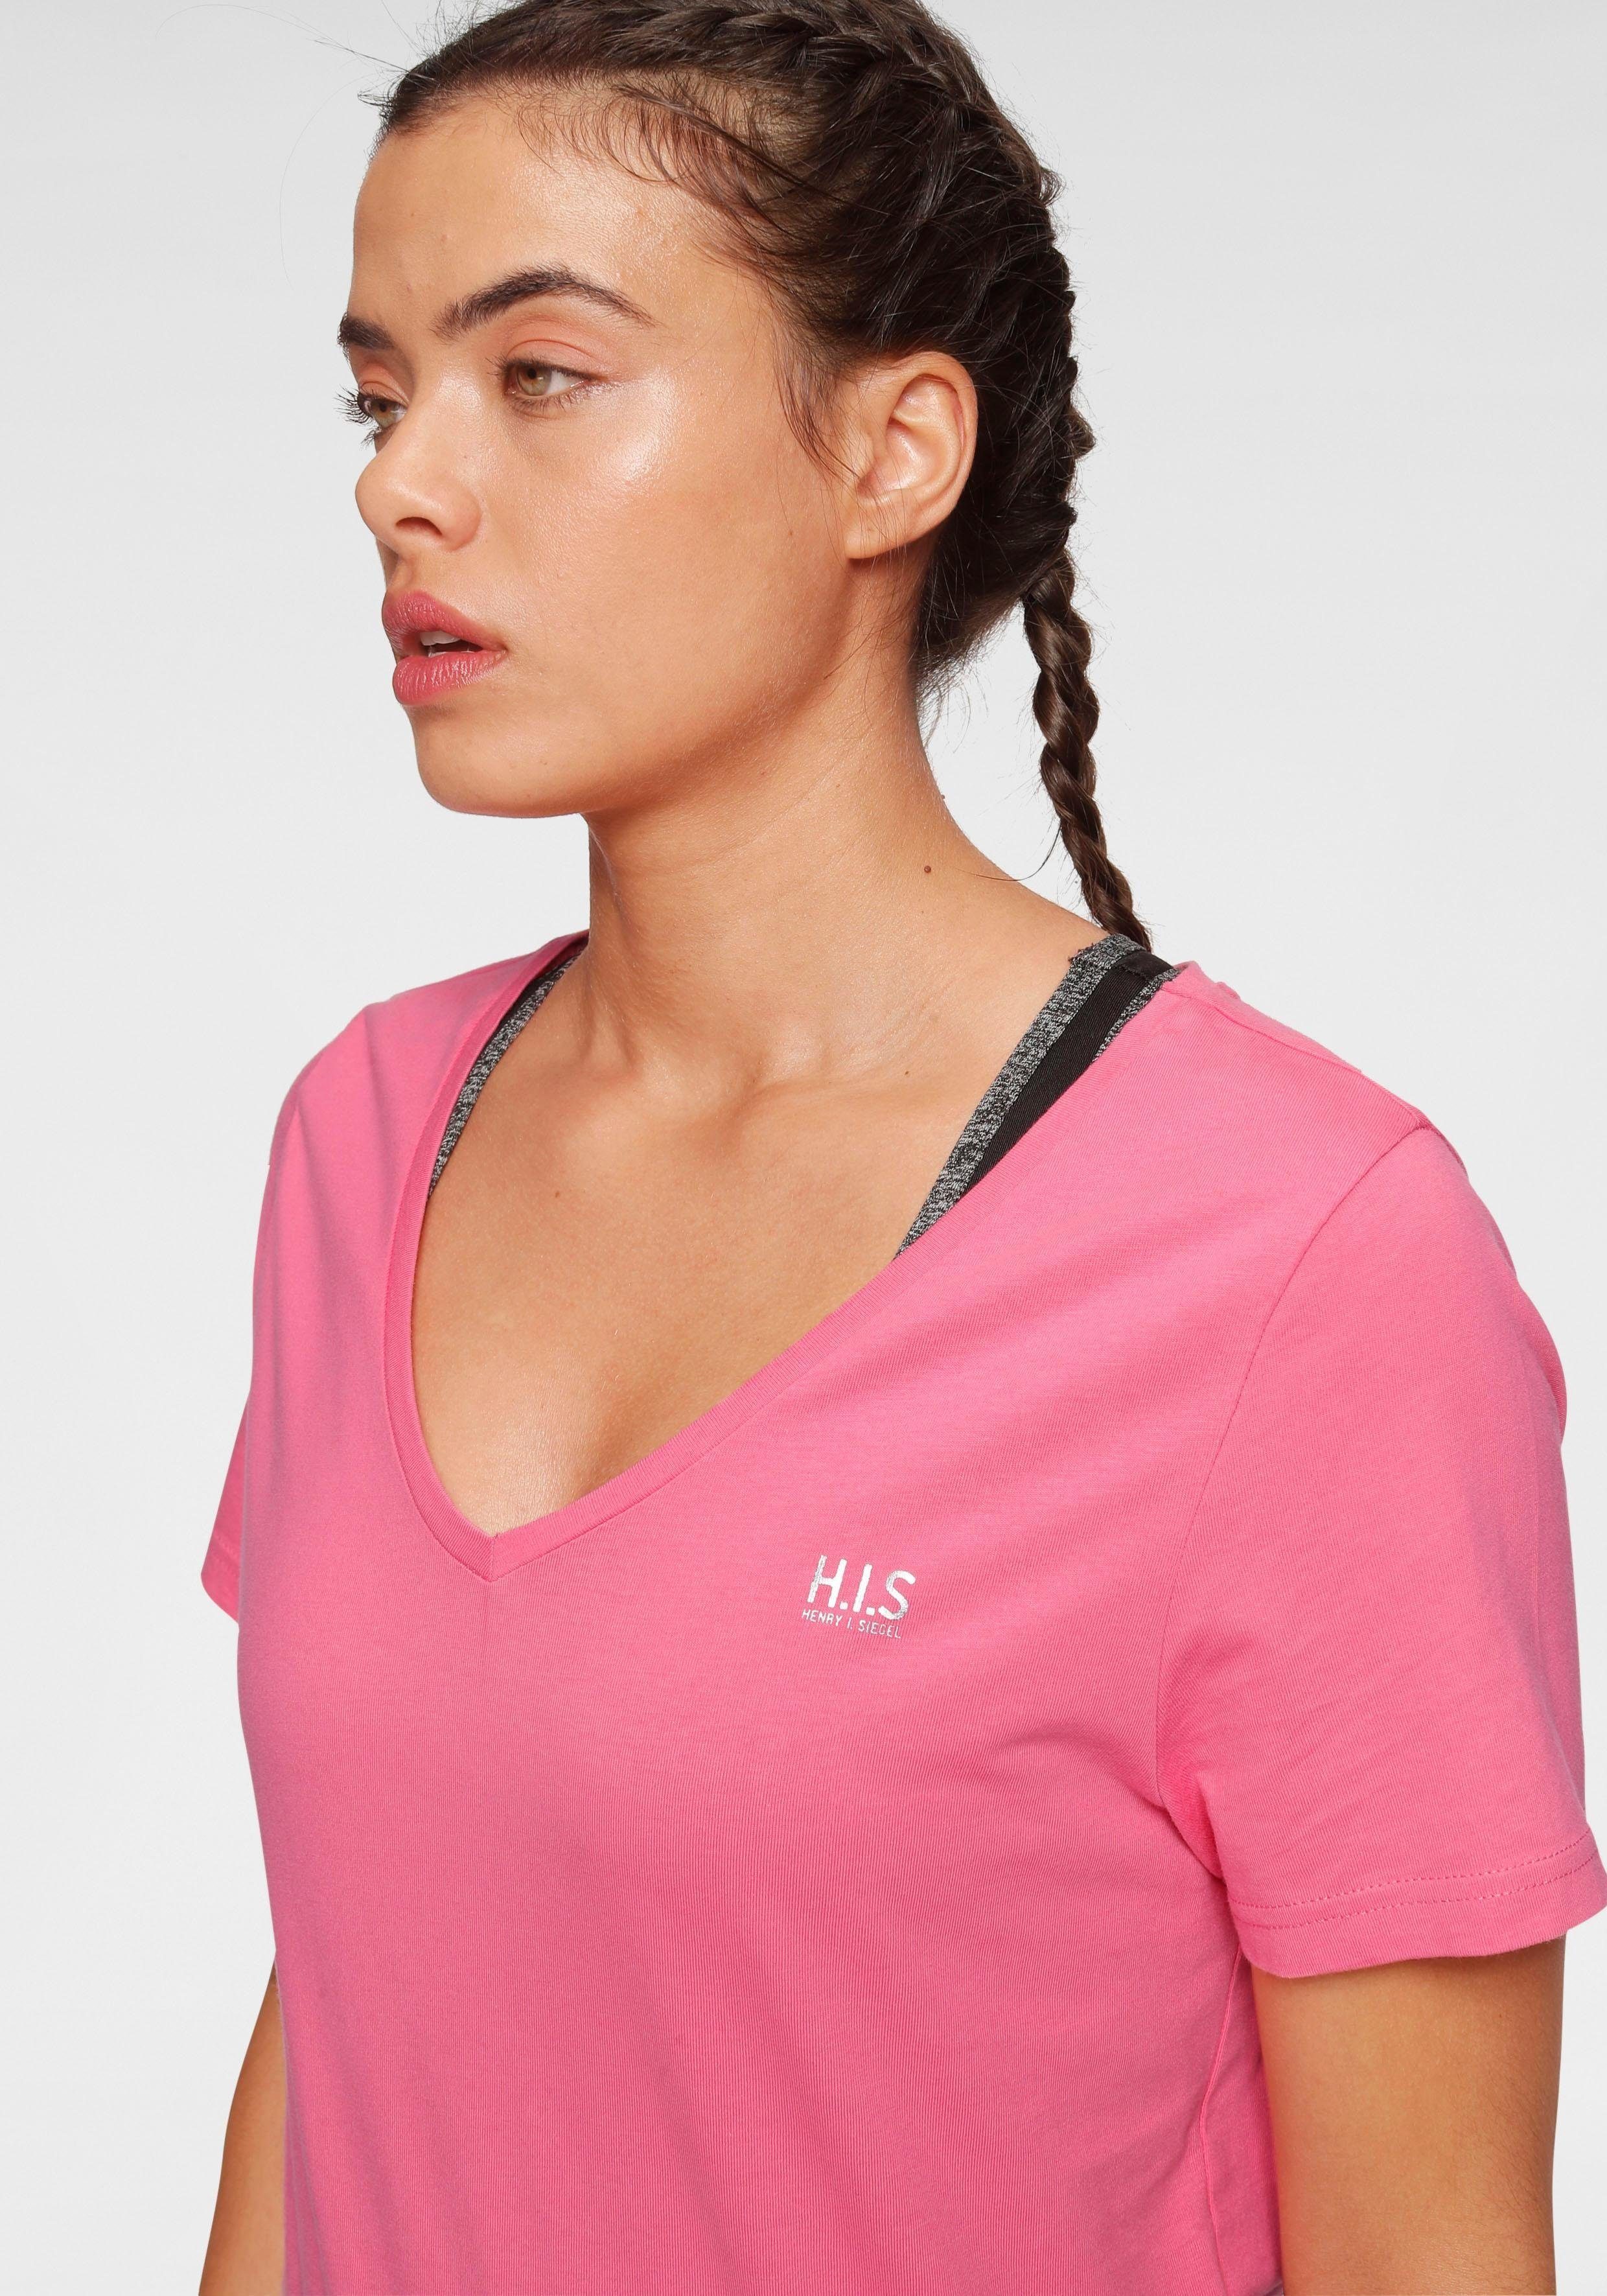 rauchblau H.I.S pink, Essential-Basics 3er-Pack) (Spar-Set, Große Größen schwarz, T-Shirt